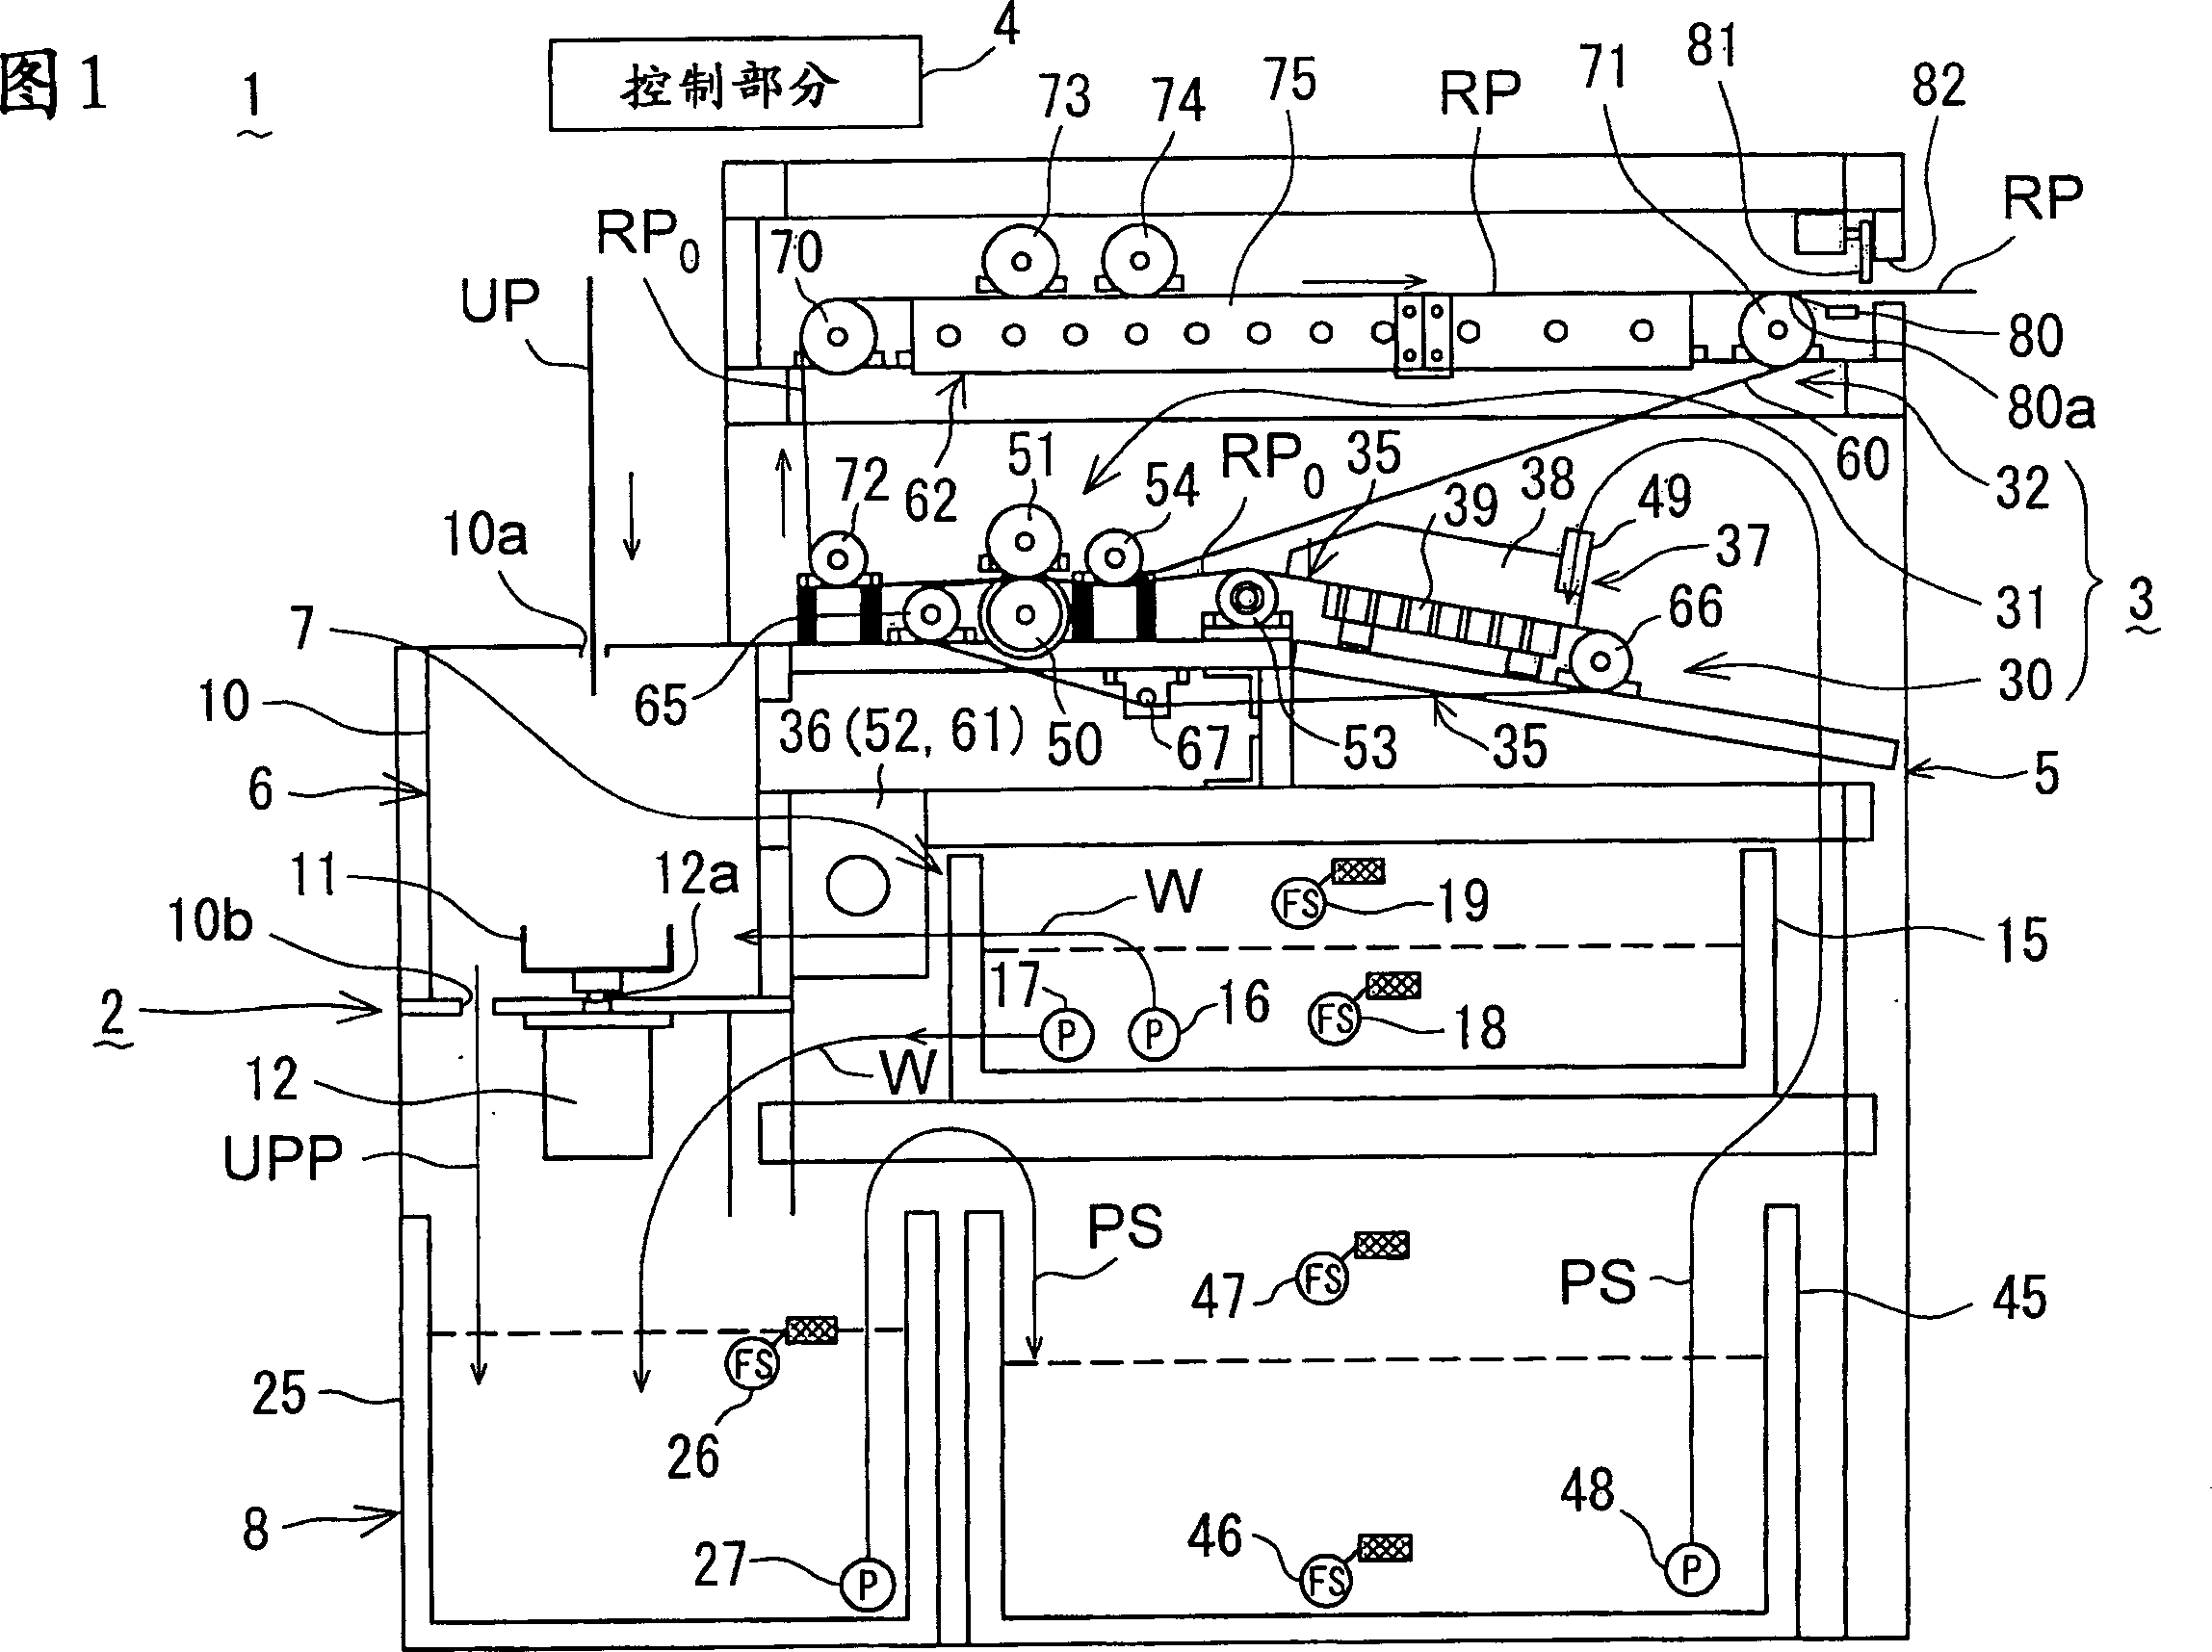 Used paper processing apparatus